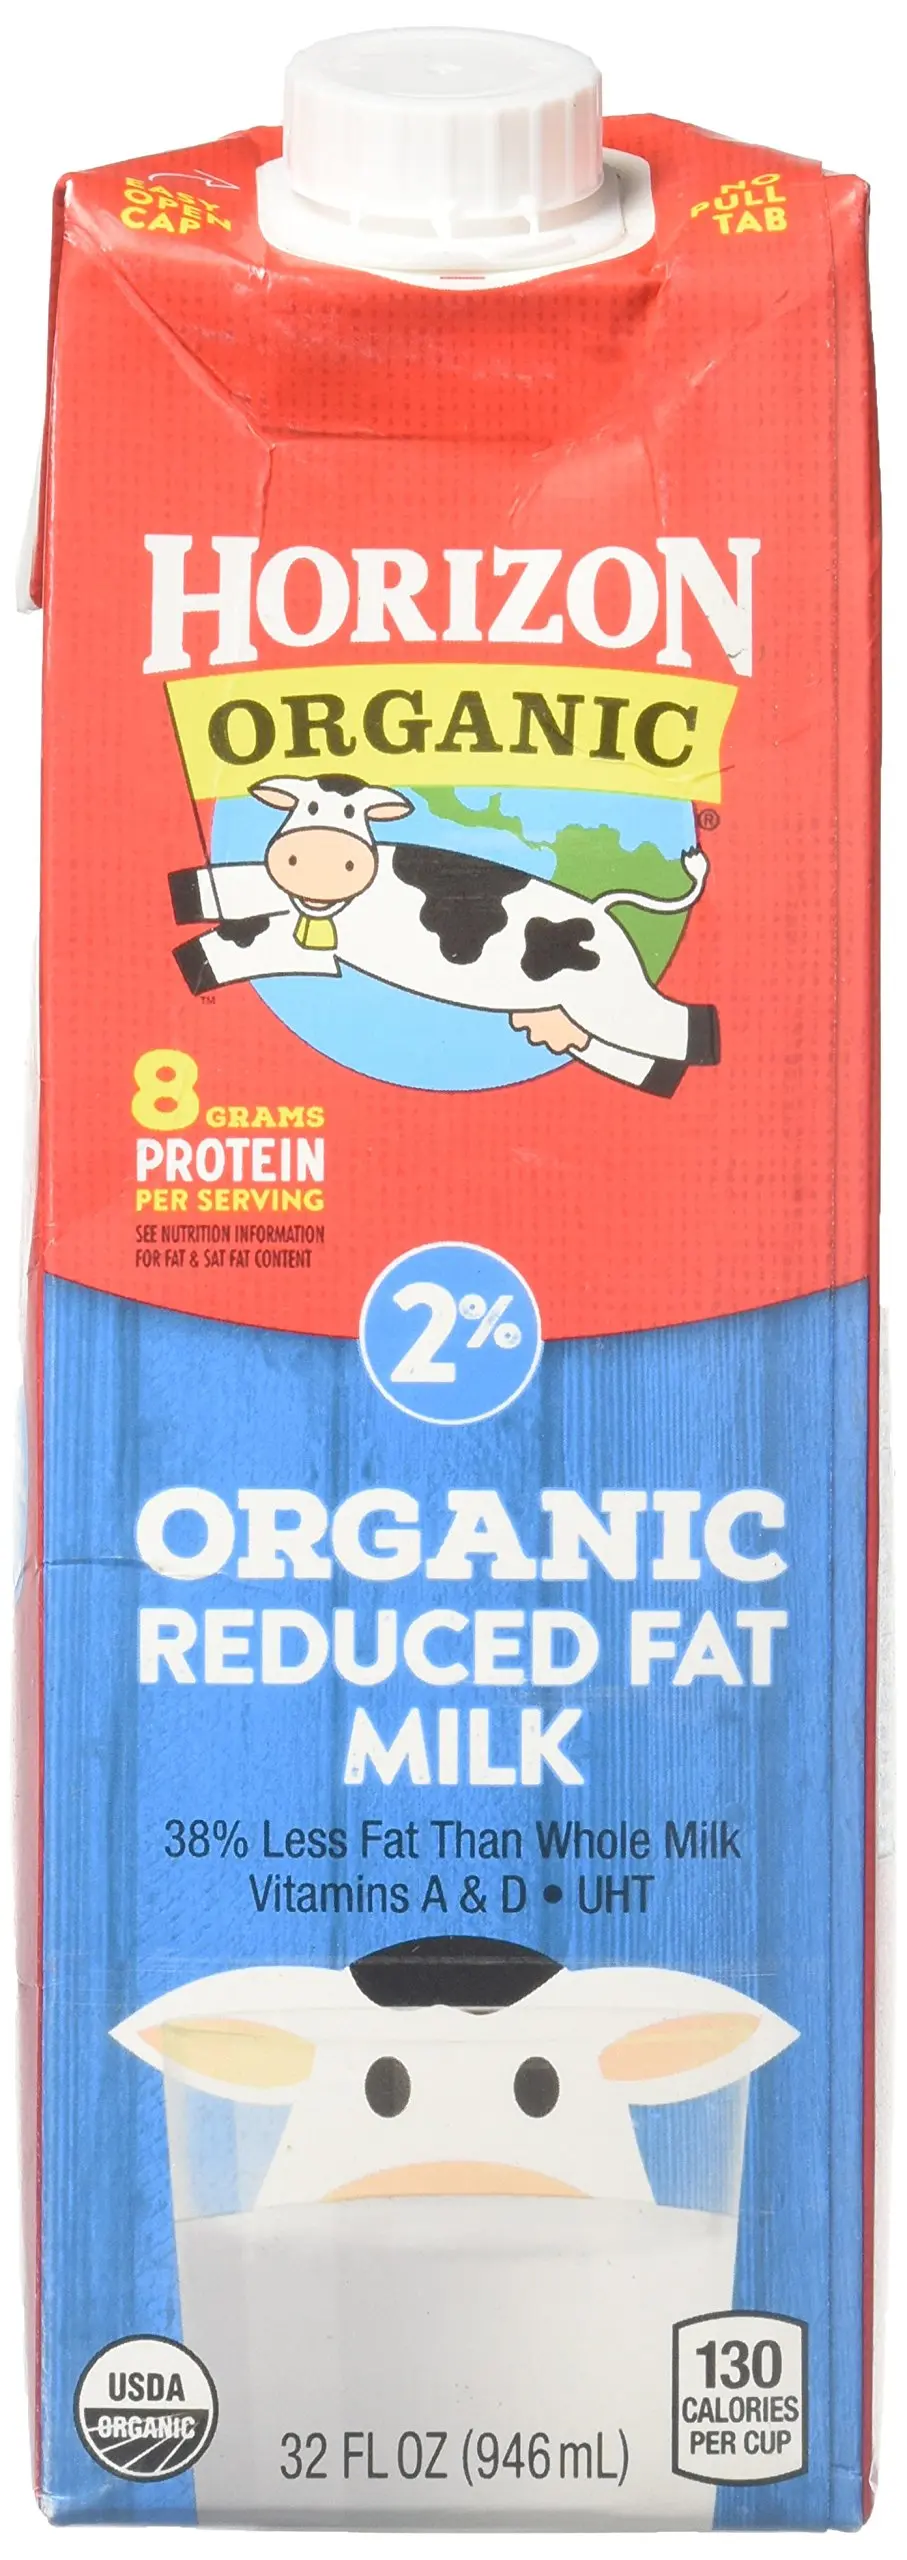 horizon organic whole milk online